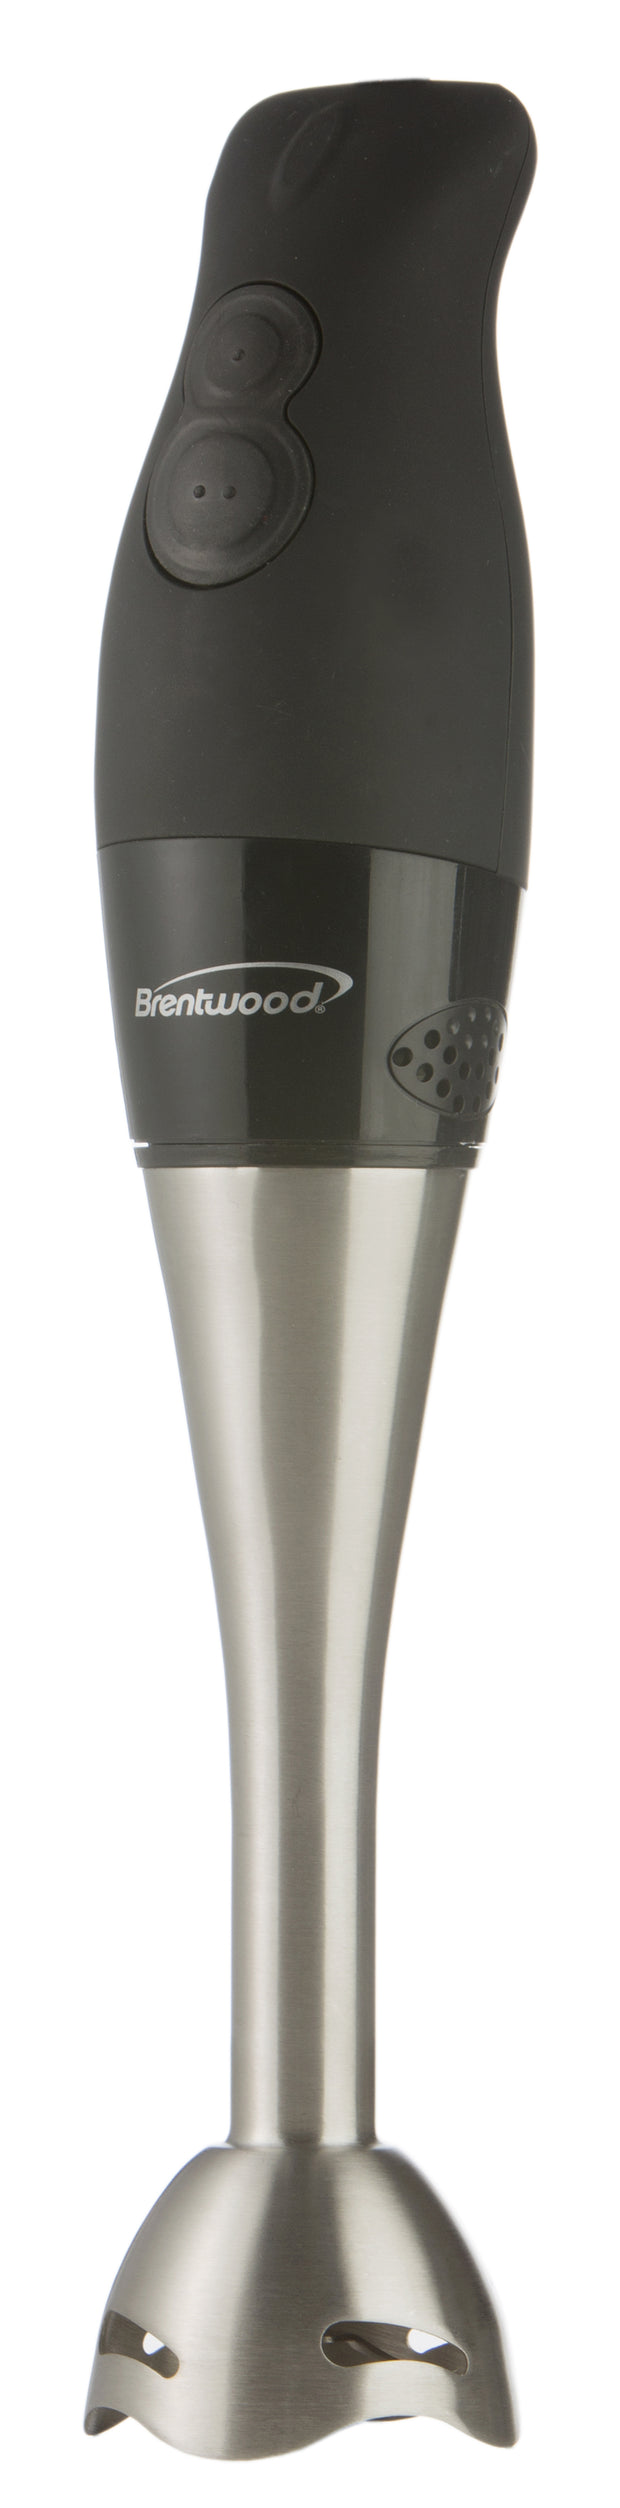 Brentwood HB-33BK 2 Speed Comfort Grip Hand Blender in Black